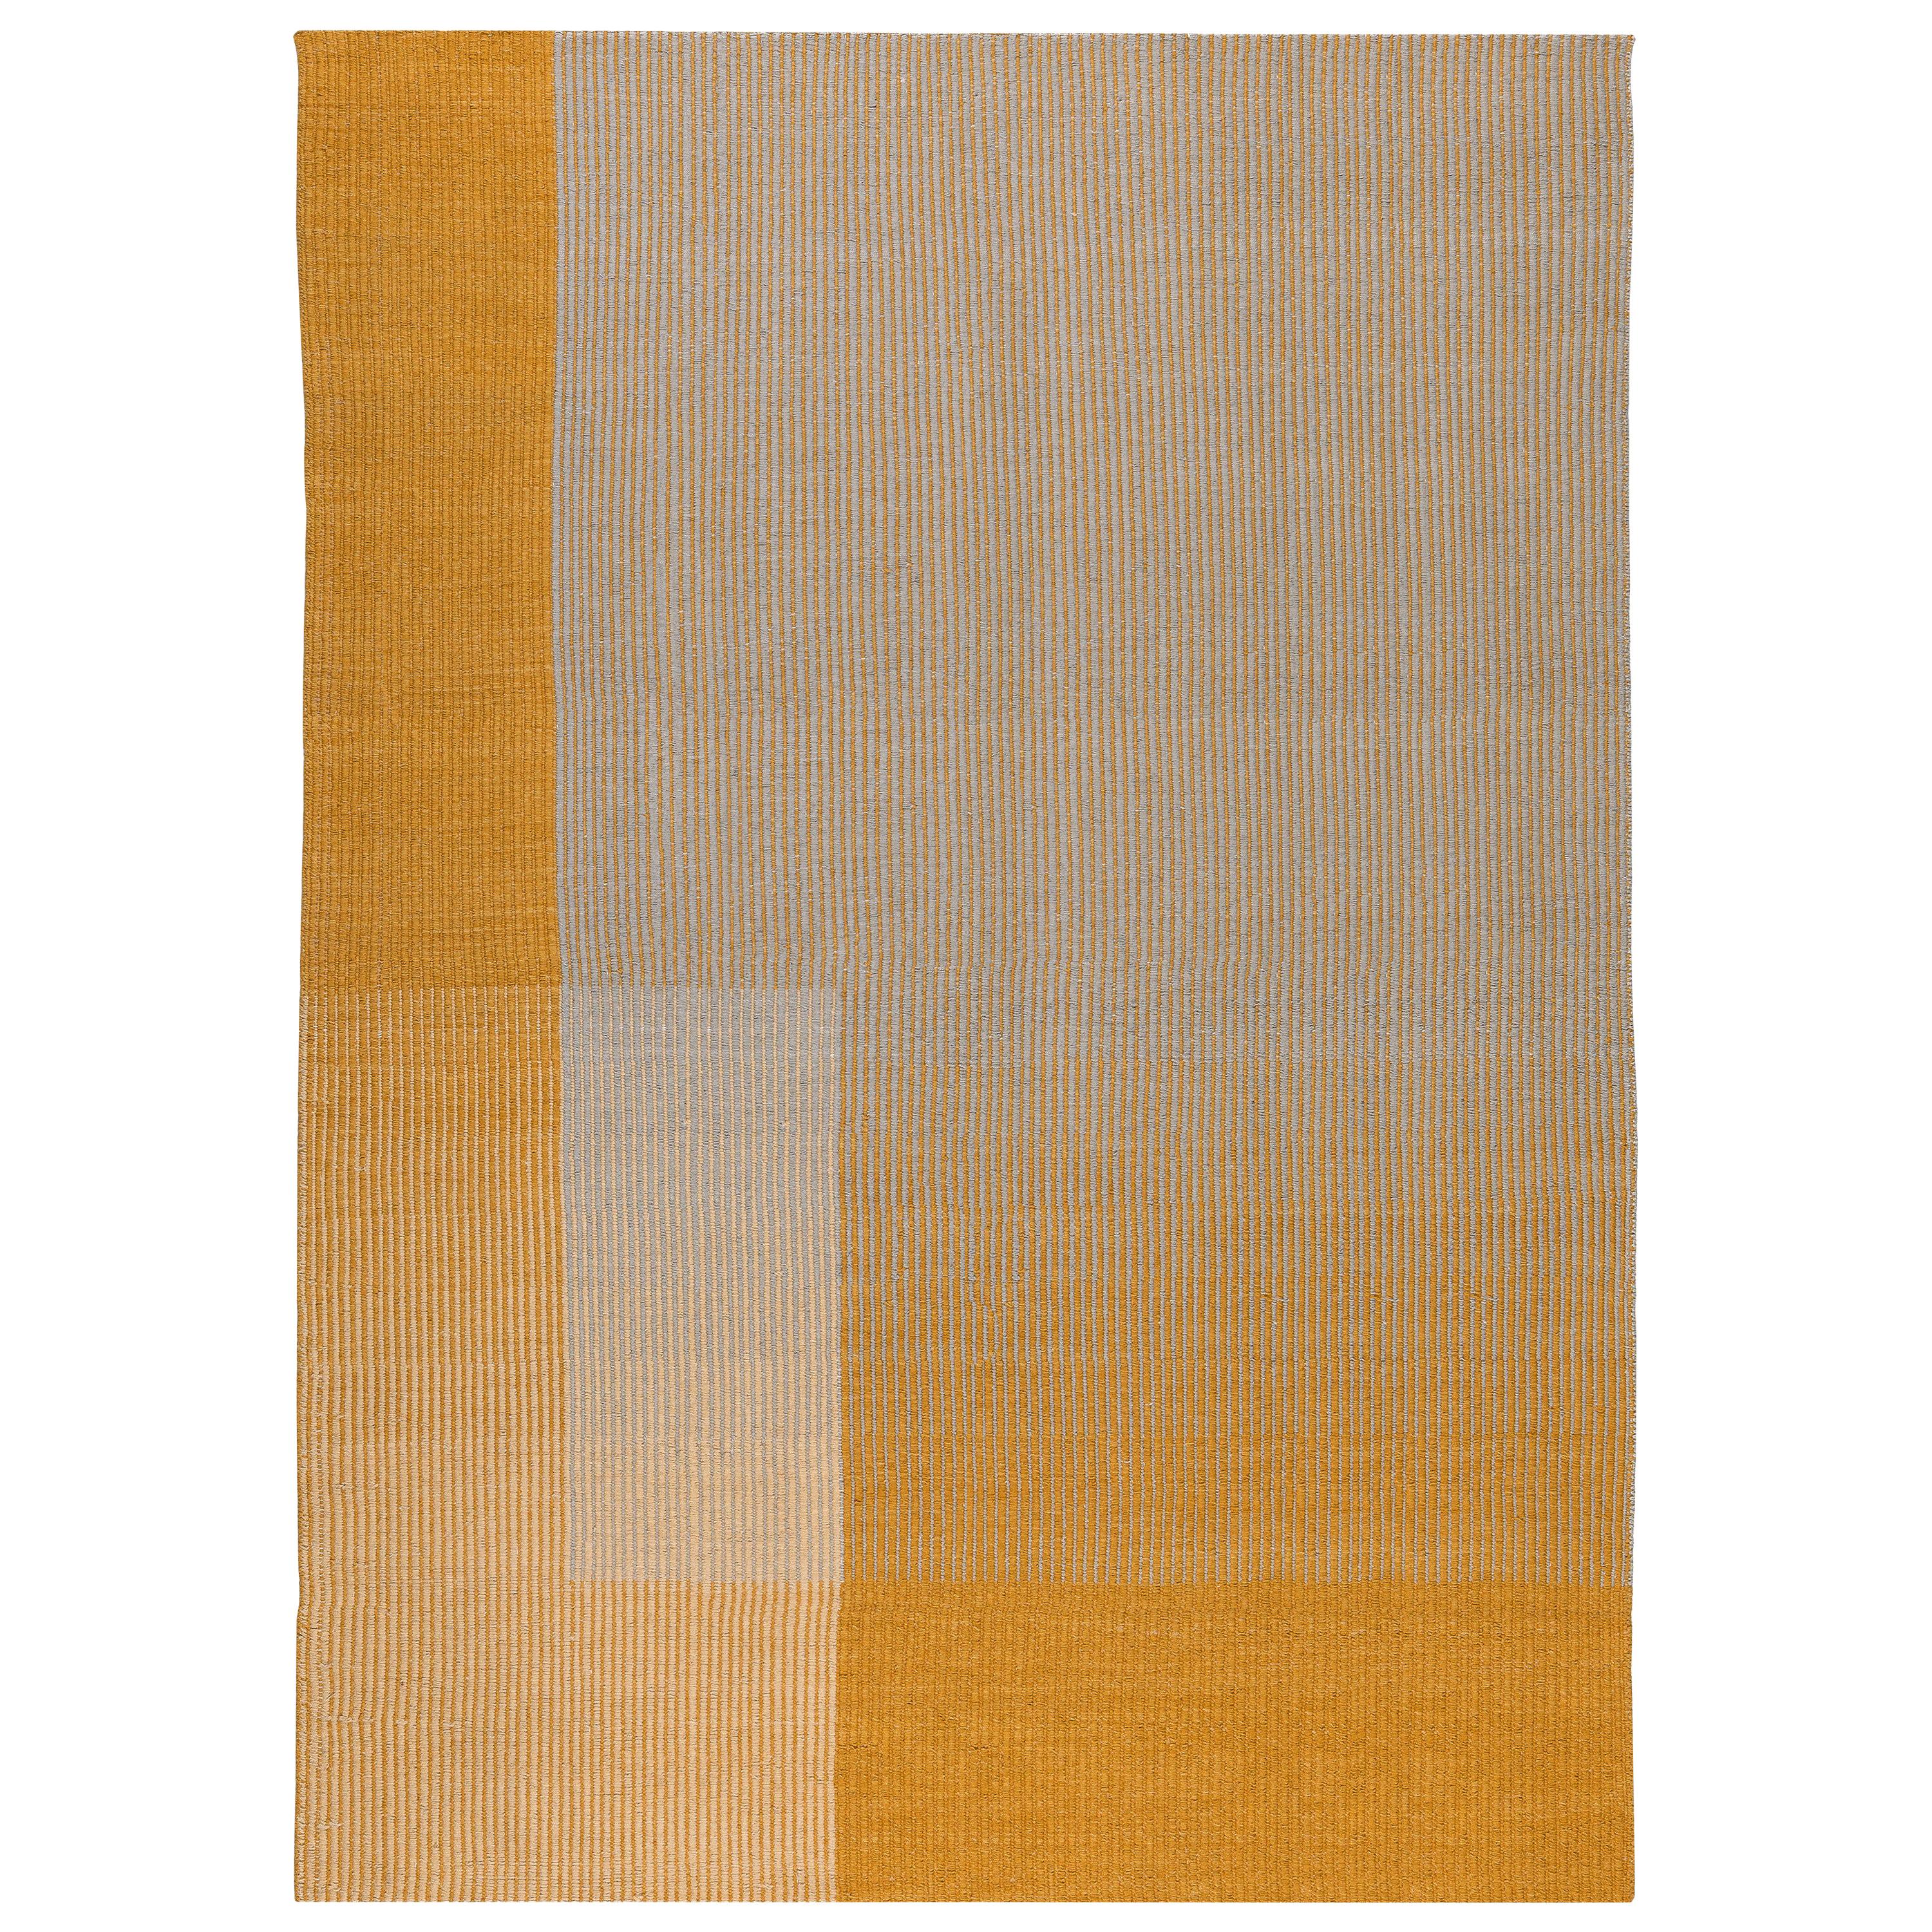 Haze Contemporary Kilim Area Rug Wool Handwoven Tuscan Sun Yellow in Stock